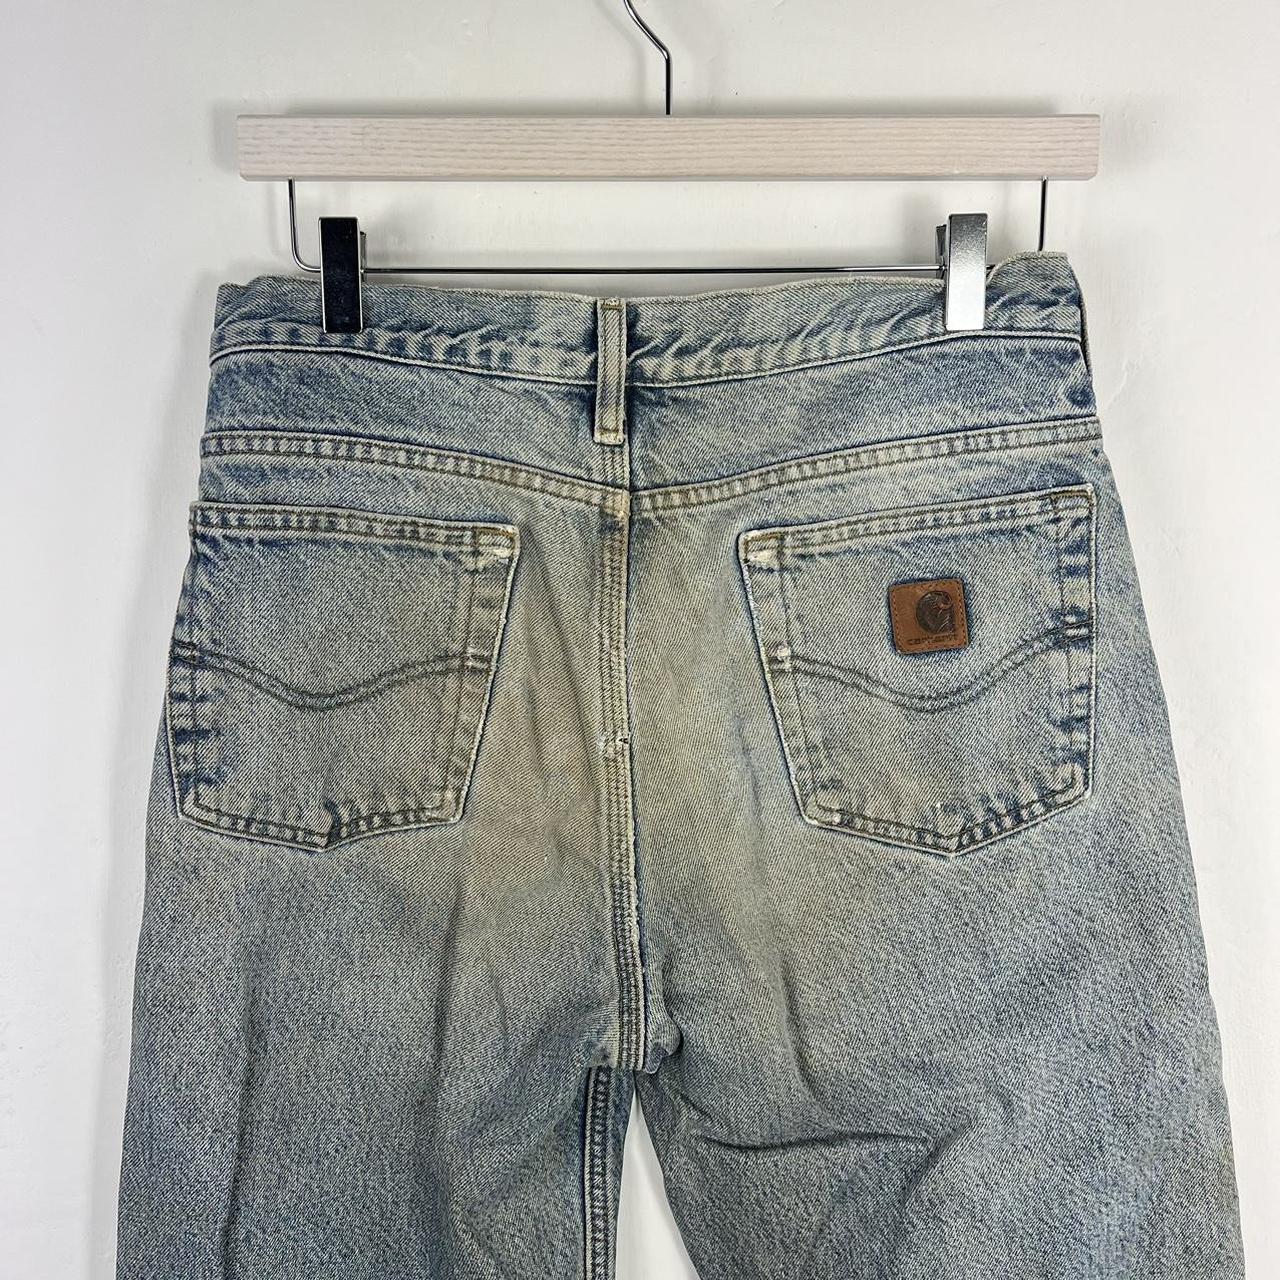 Carharrt jeans 30x34 Denim blue Used for workwear... - Depop